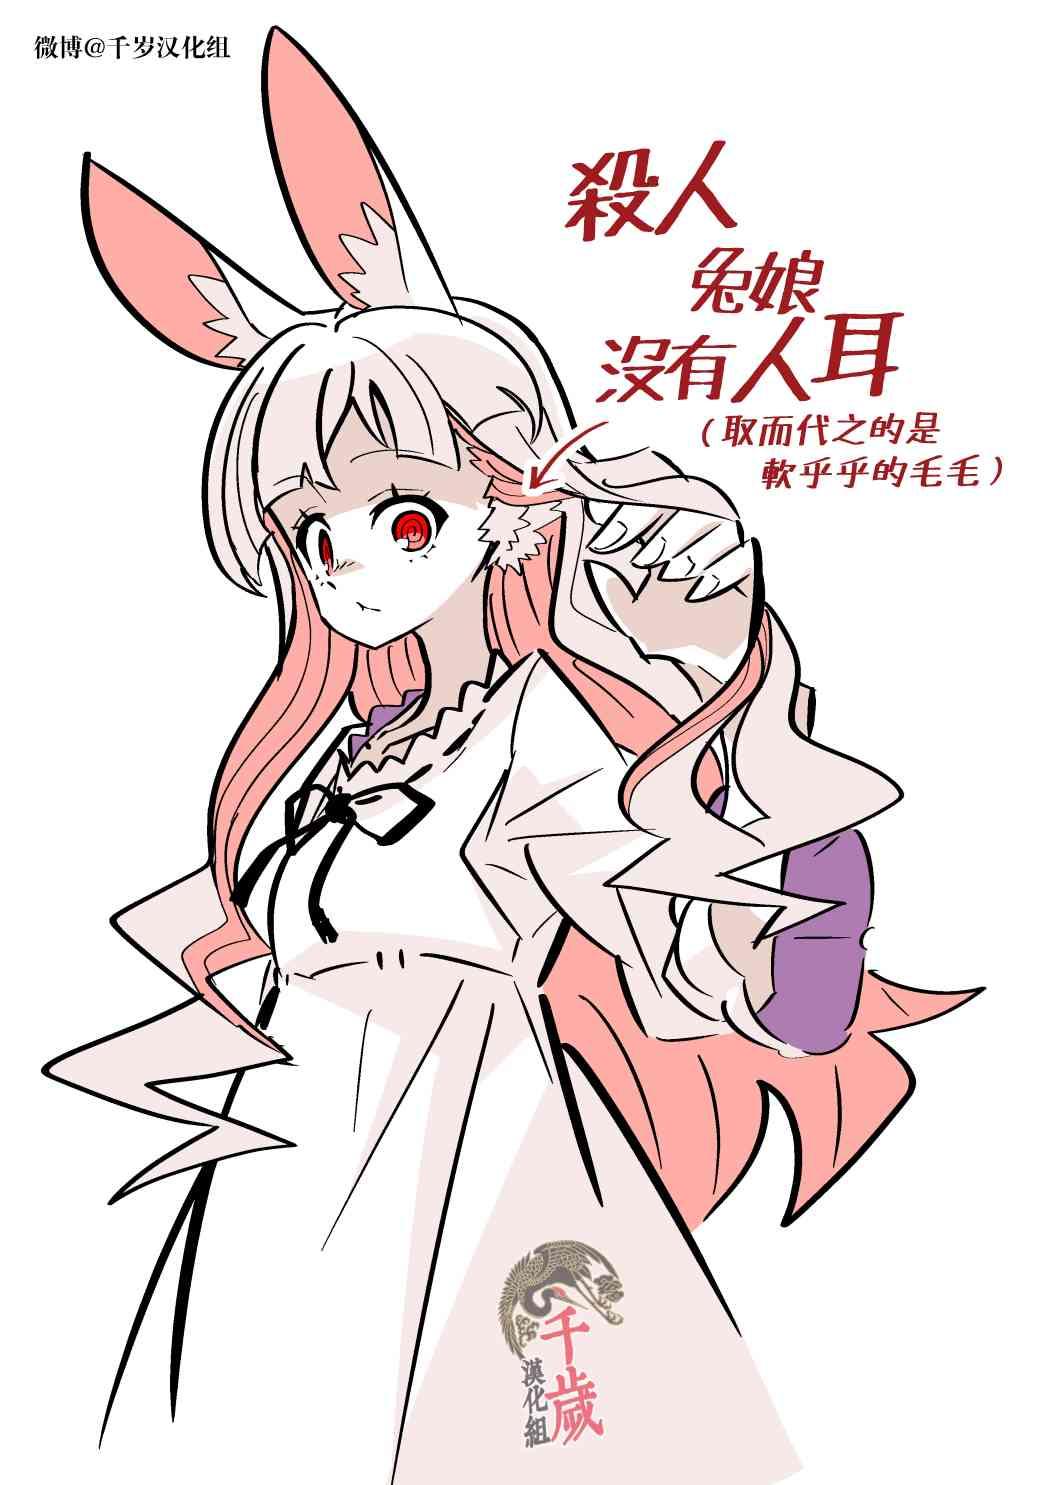 Murder Rabbit Girl vs Series 杀人兔娘 10